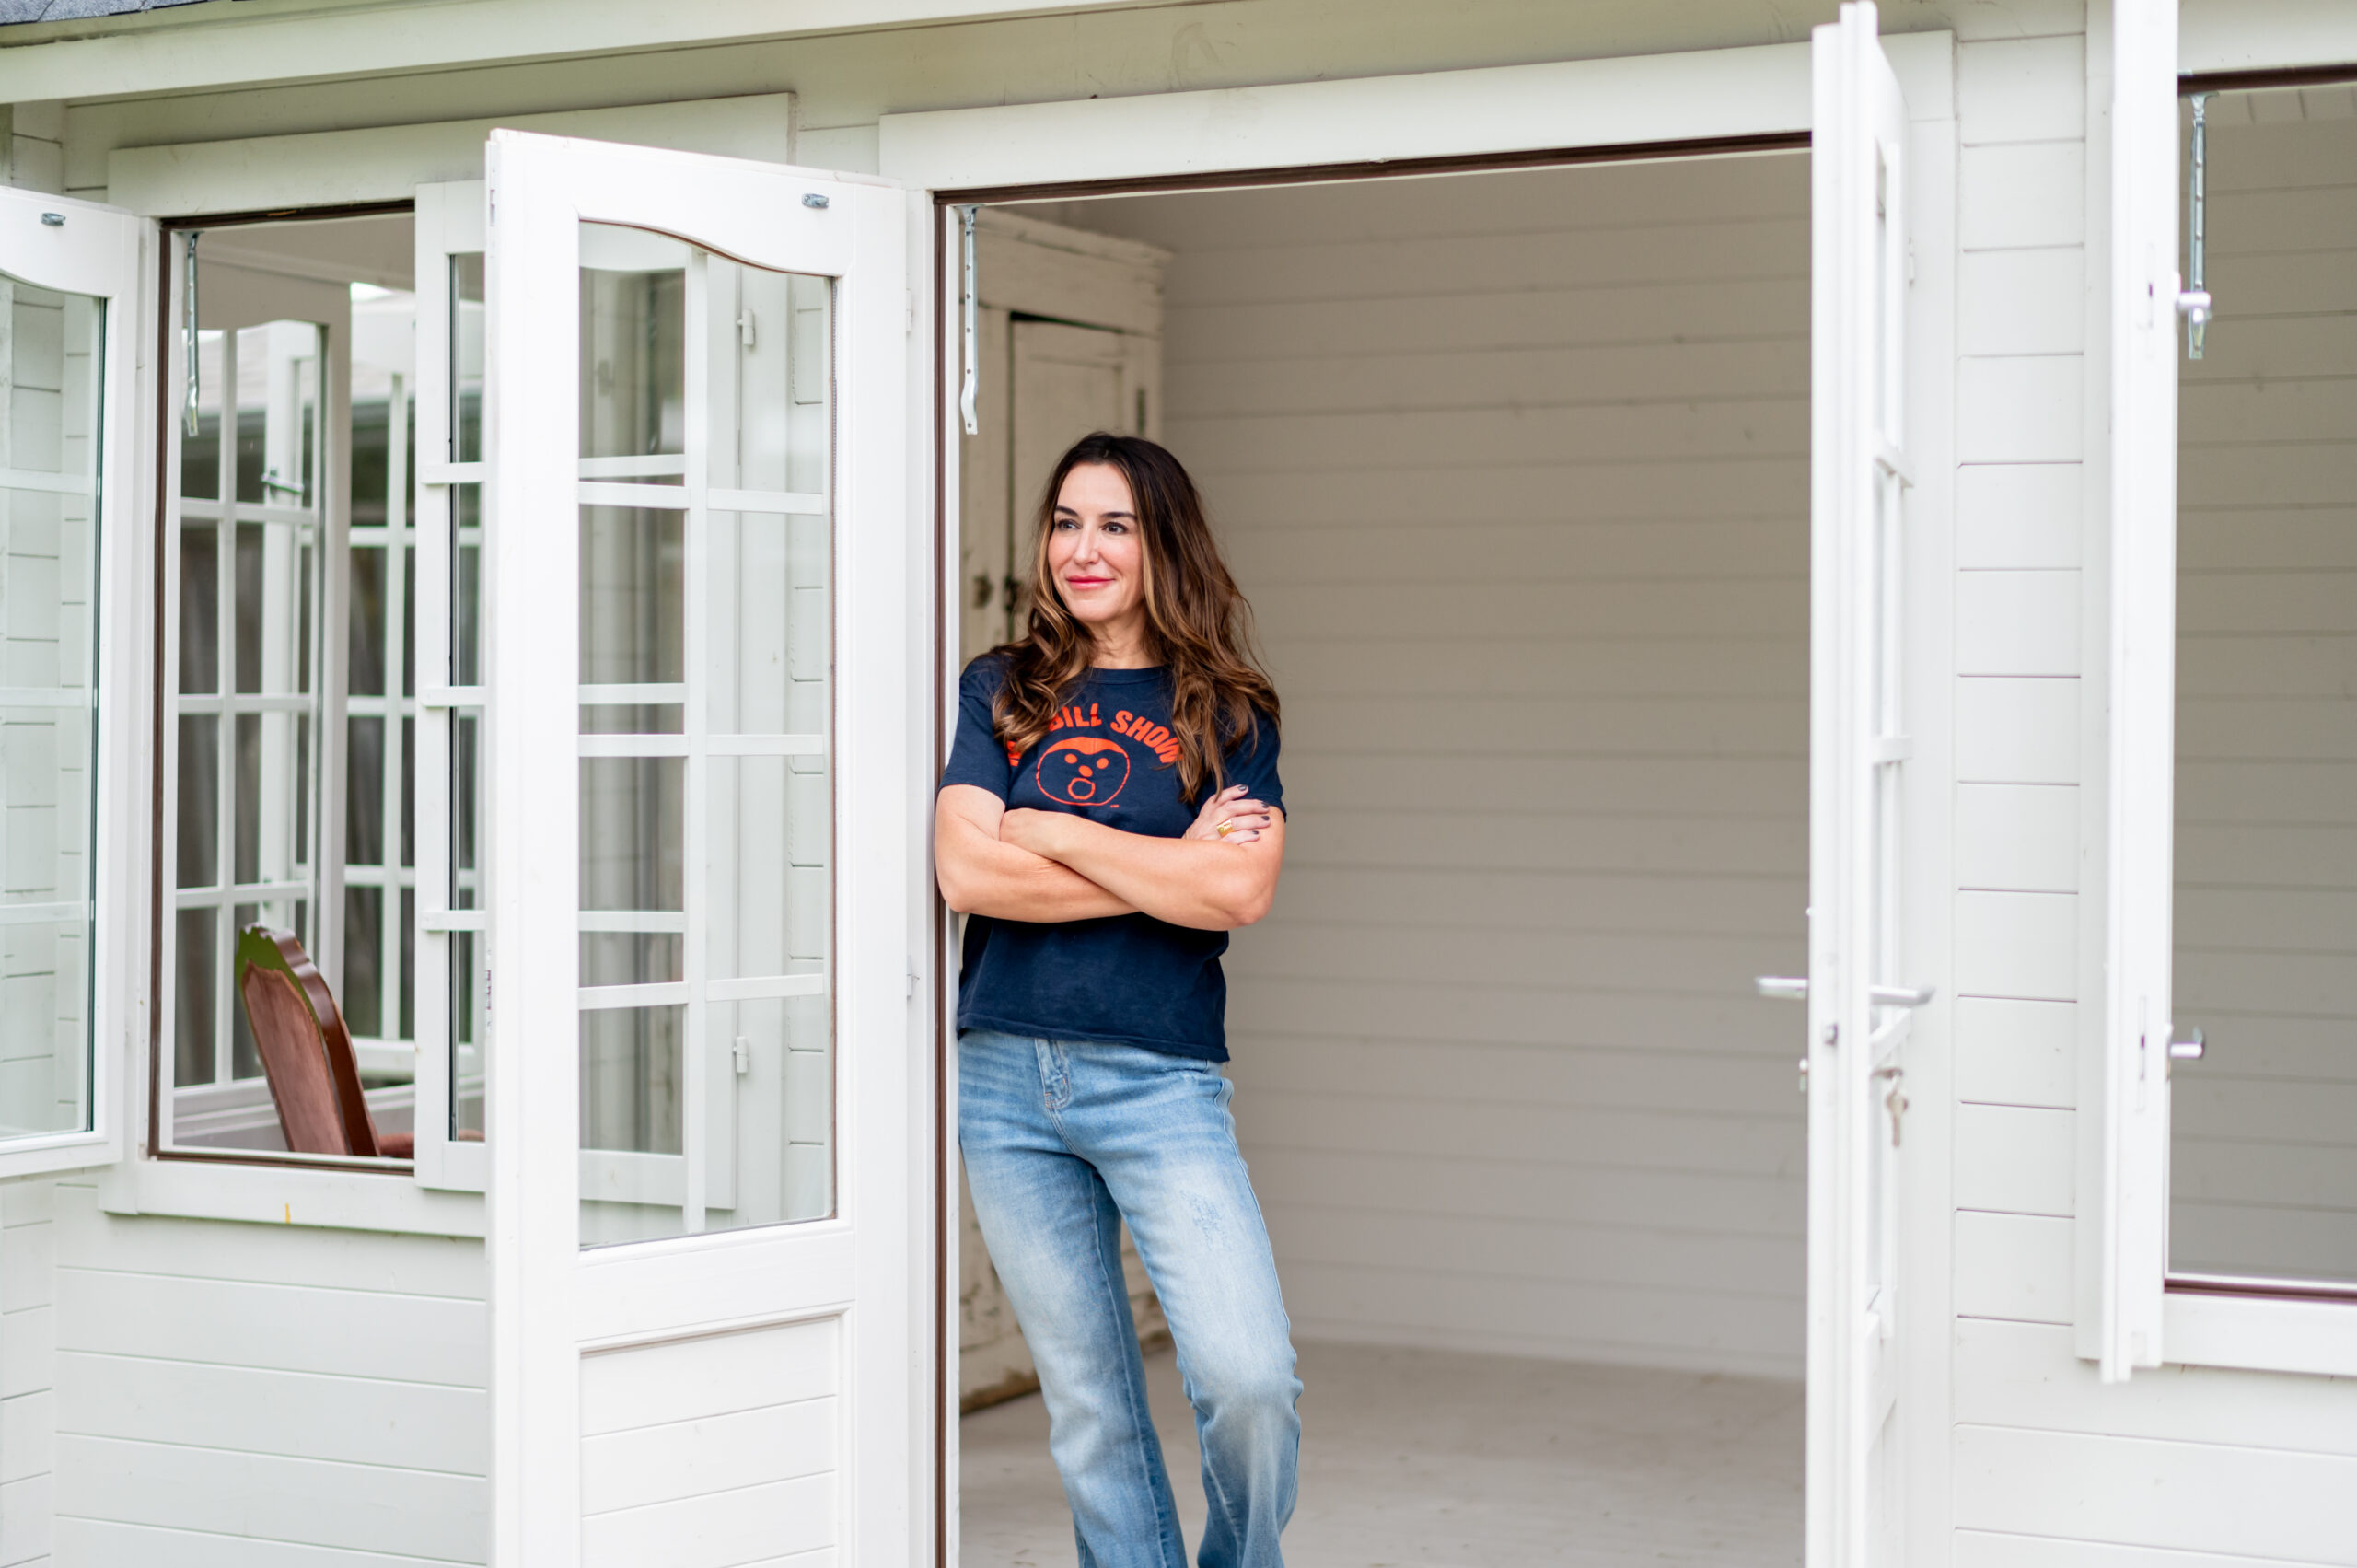 Woman standing posing in door frame for her business launch photoshoot